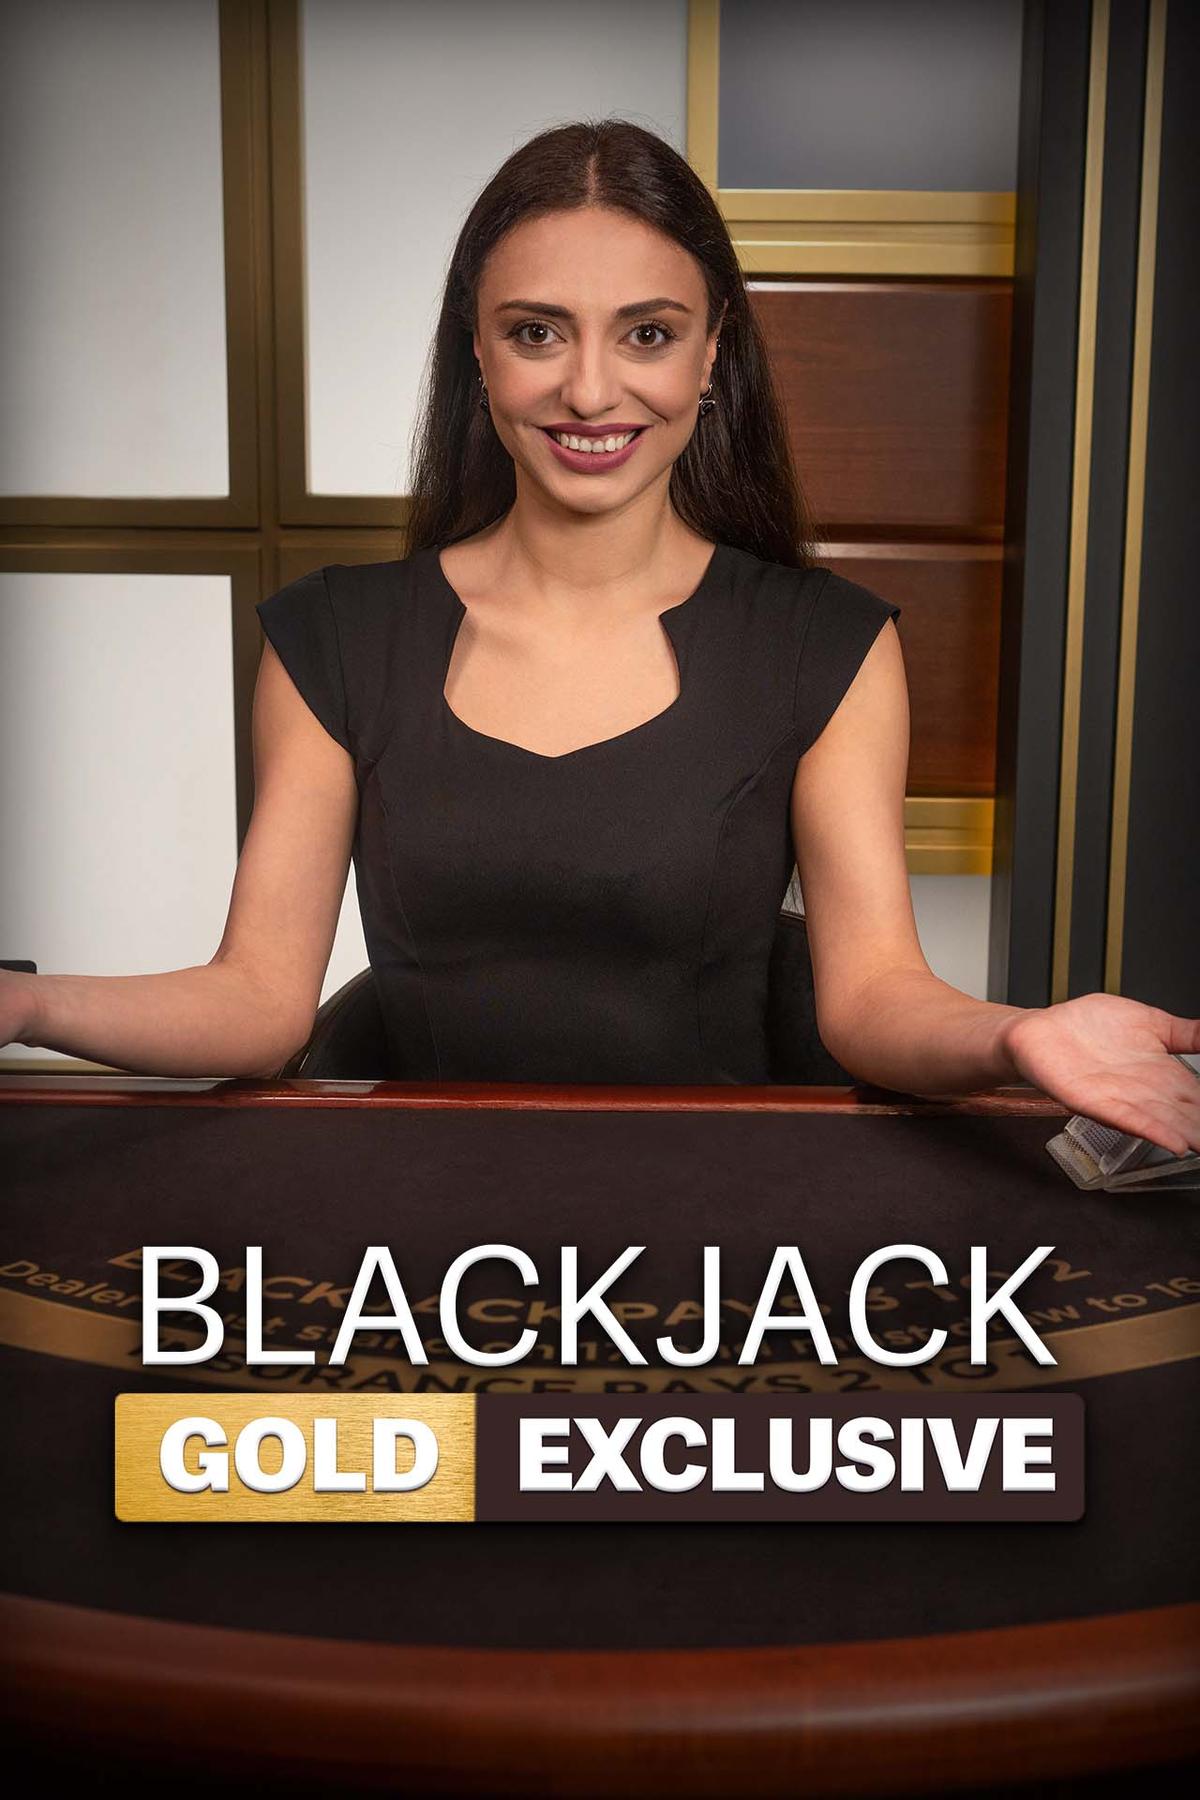 Blackjack Gold Exclusive